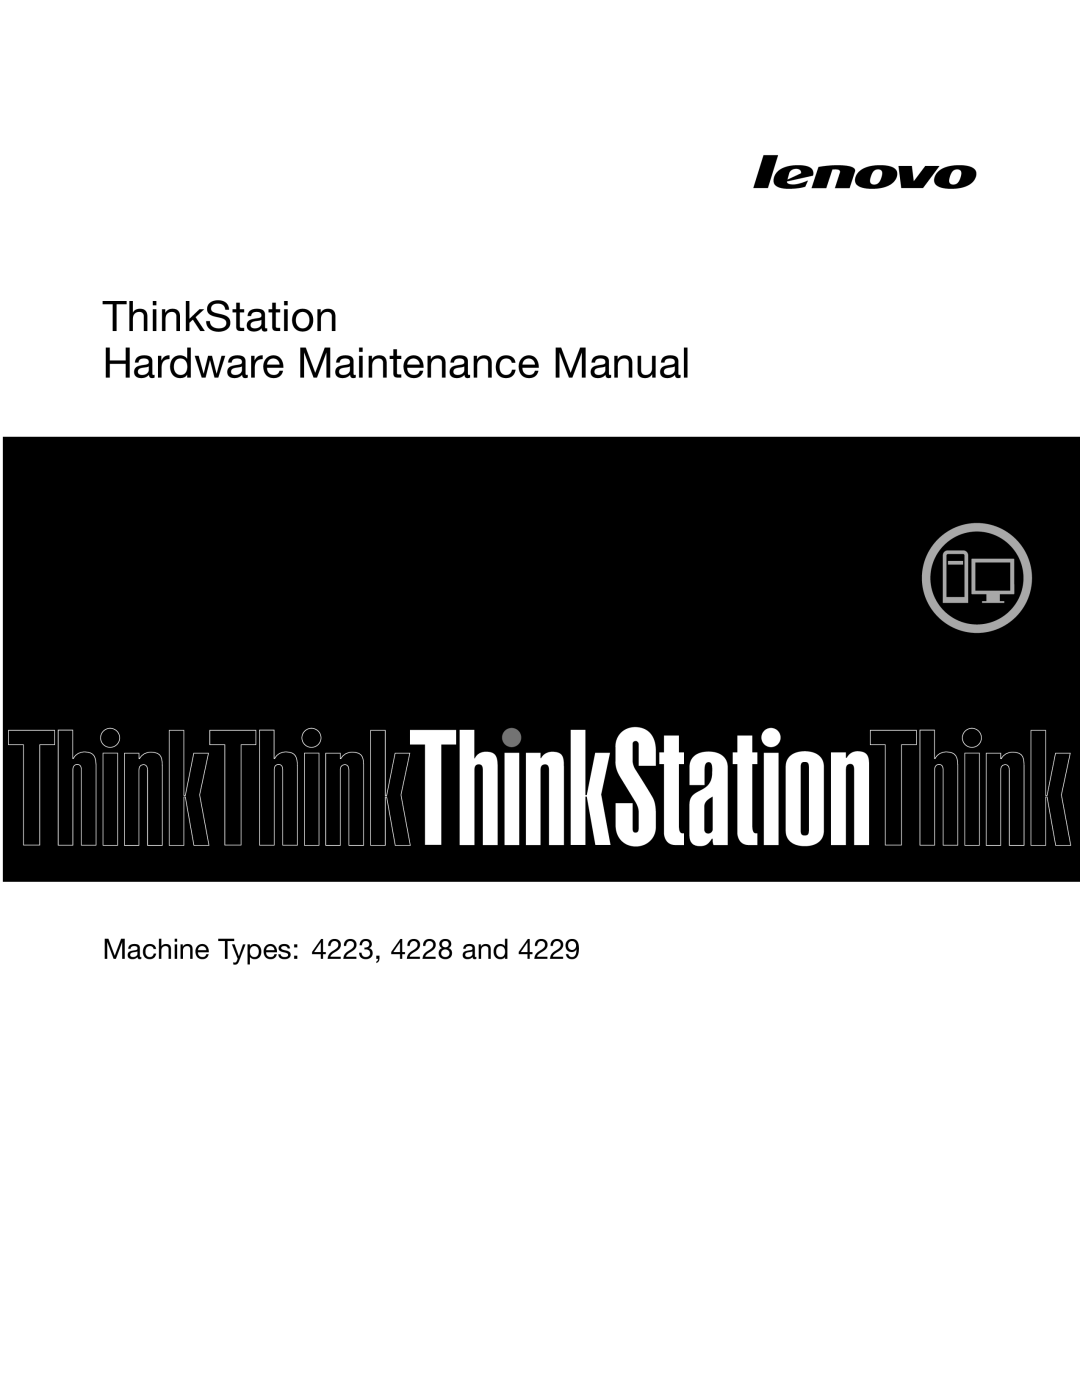 Lenovo 4228, 4223, 4229 manual ThinkStation Hardware Maintenance Manual 